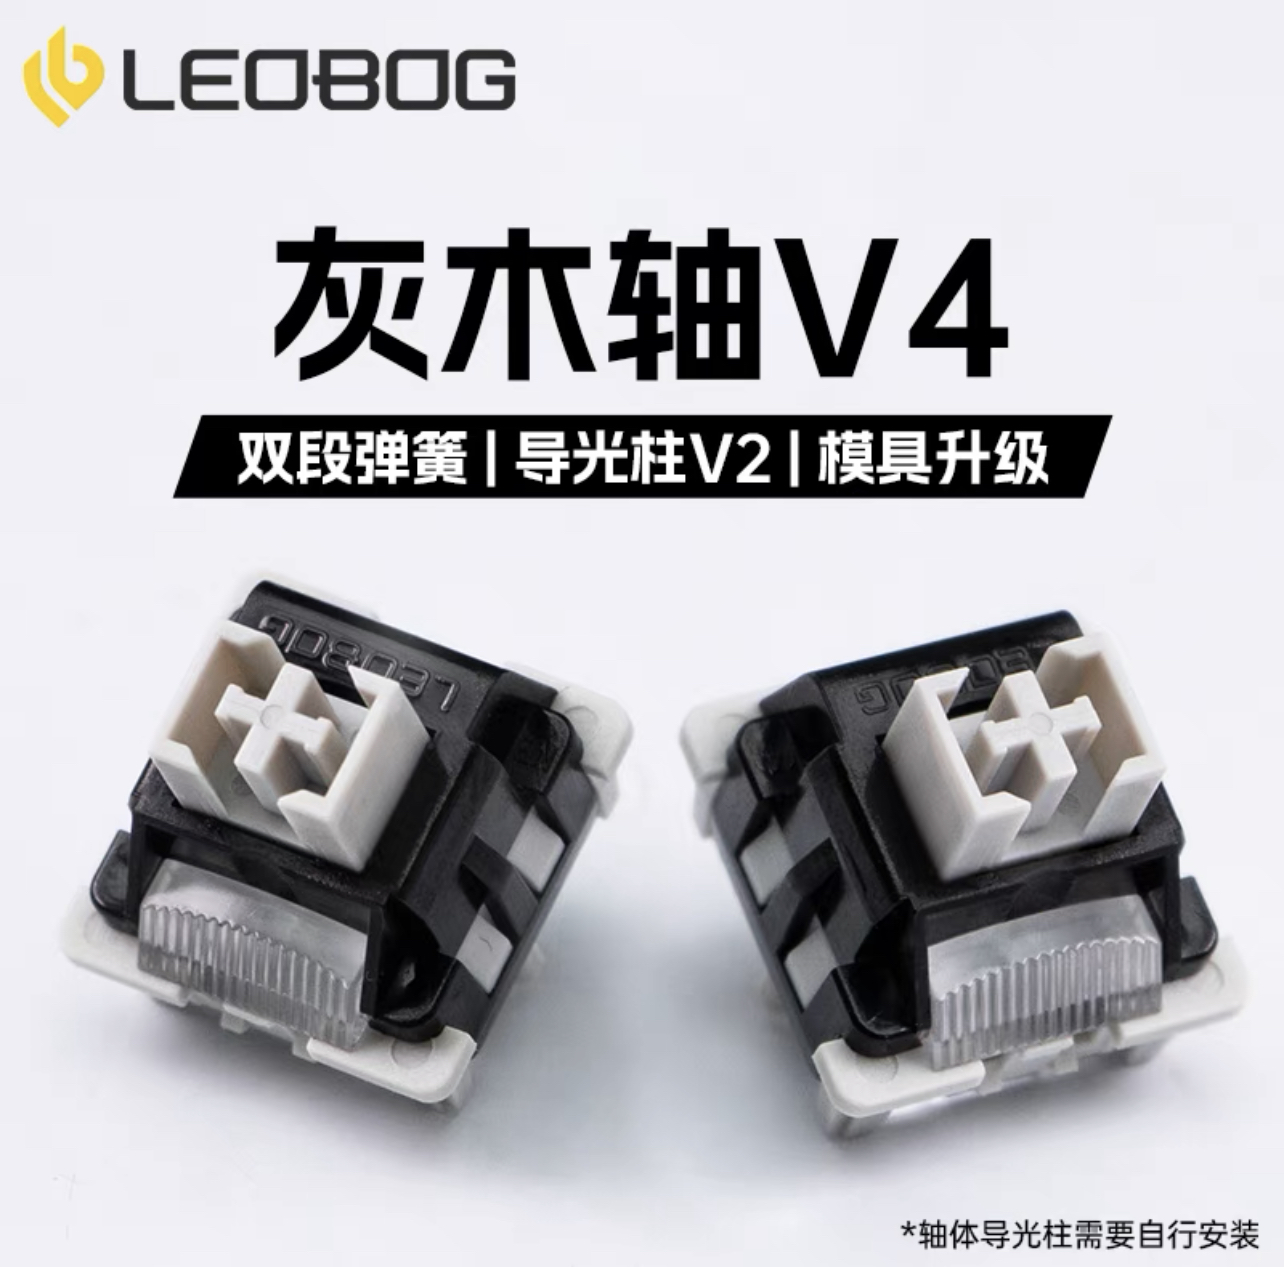 LEOBOG グレー木軸 V4 ホットスワップ可能なリニア軸 厚さ 5 フィートのメカニカル キーボード軸スイッチ グレー木軸 V3